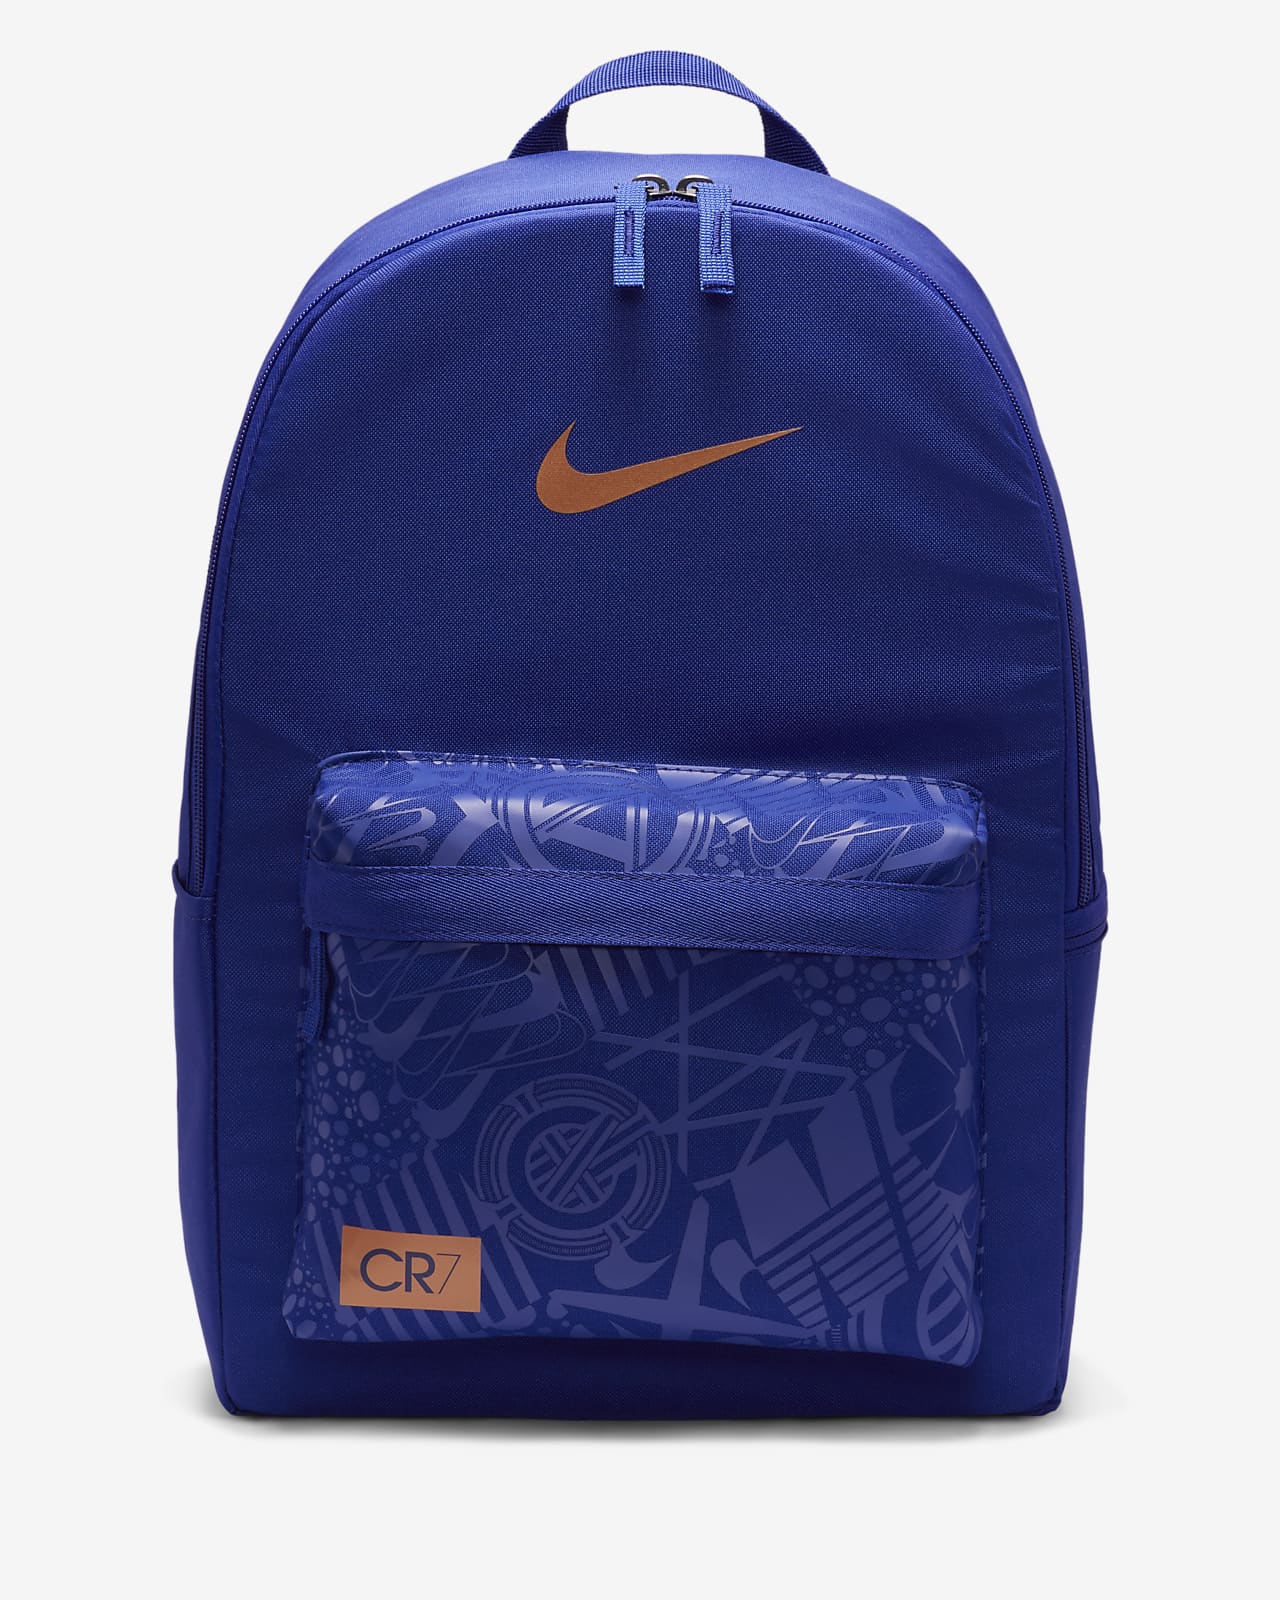 Nike Heritage CR7 Backpack (25L)